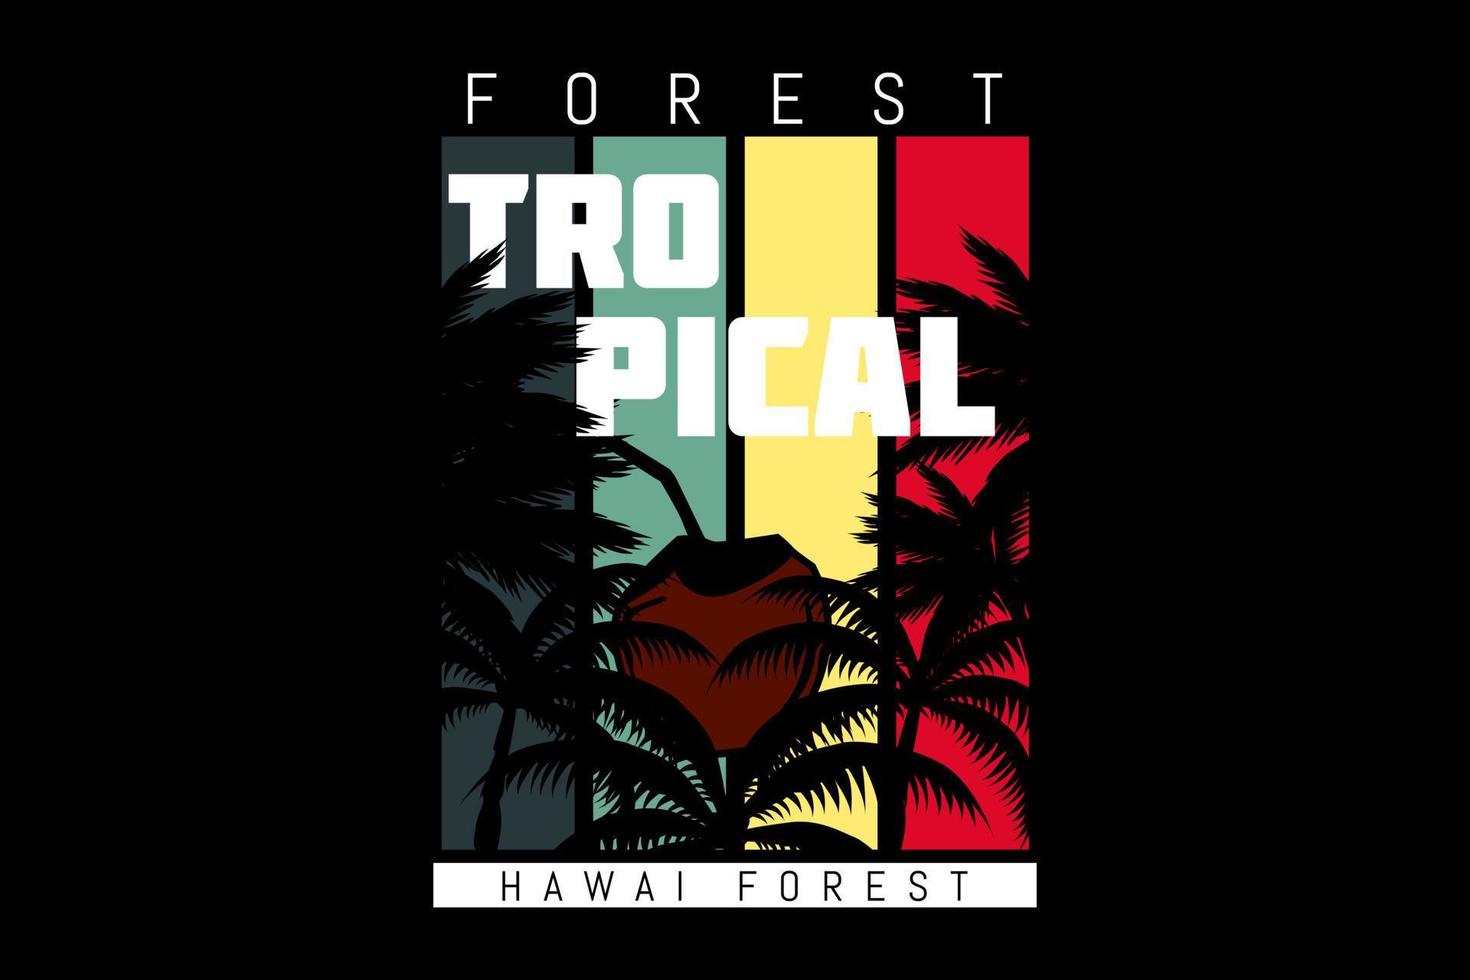 Hawaii forest silhouette retro design vector